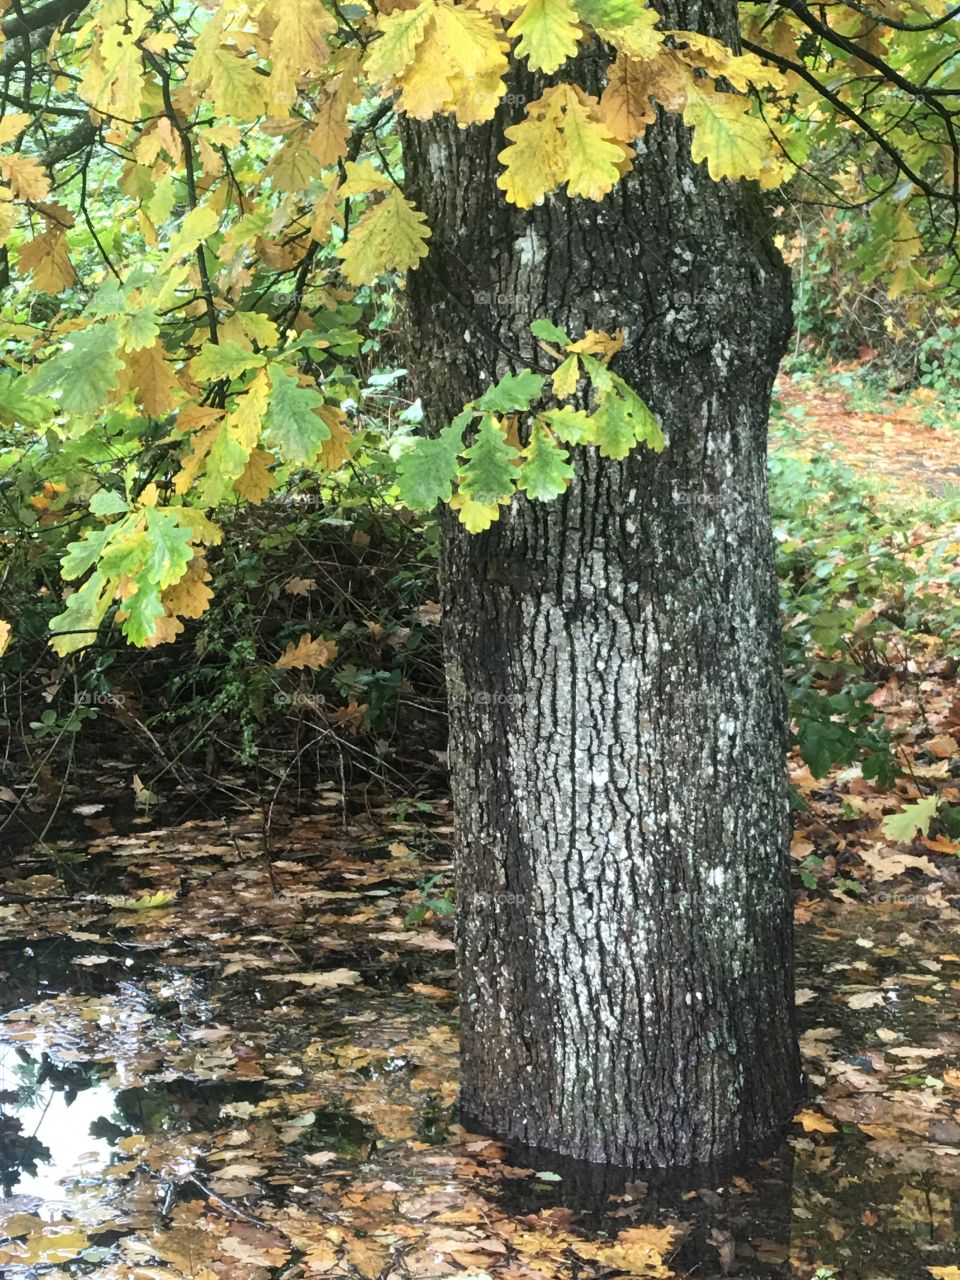 View of tree trunk in autumn season